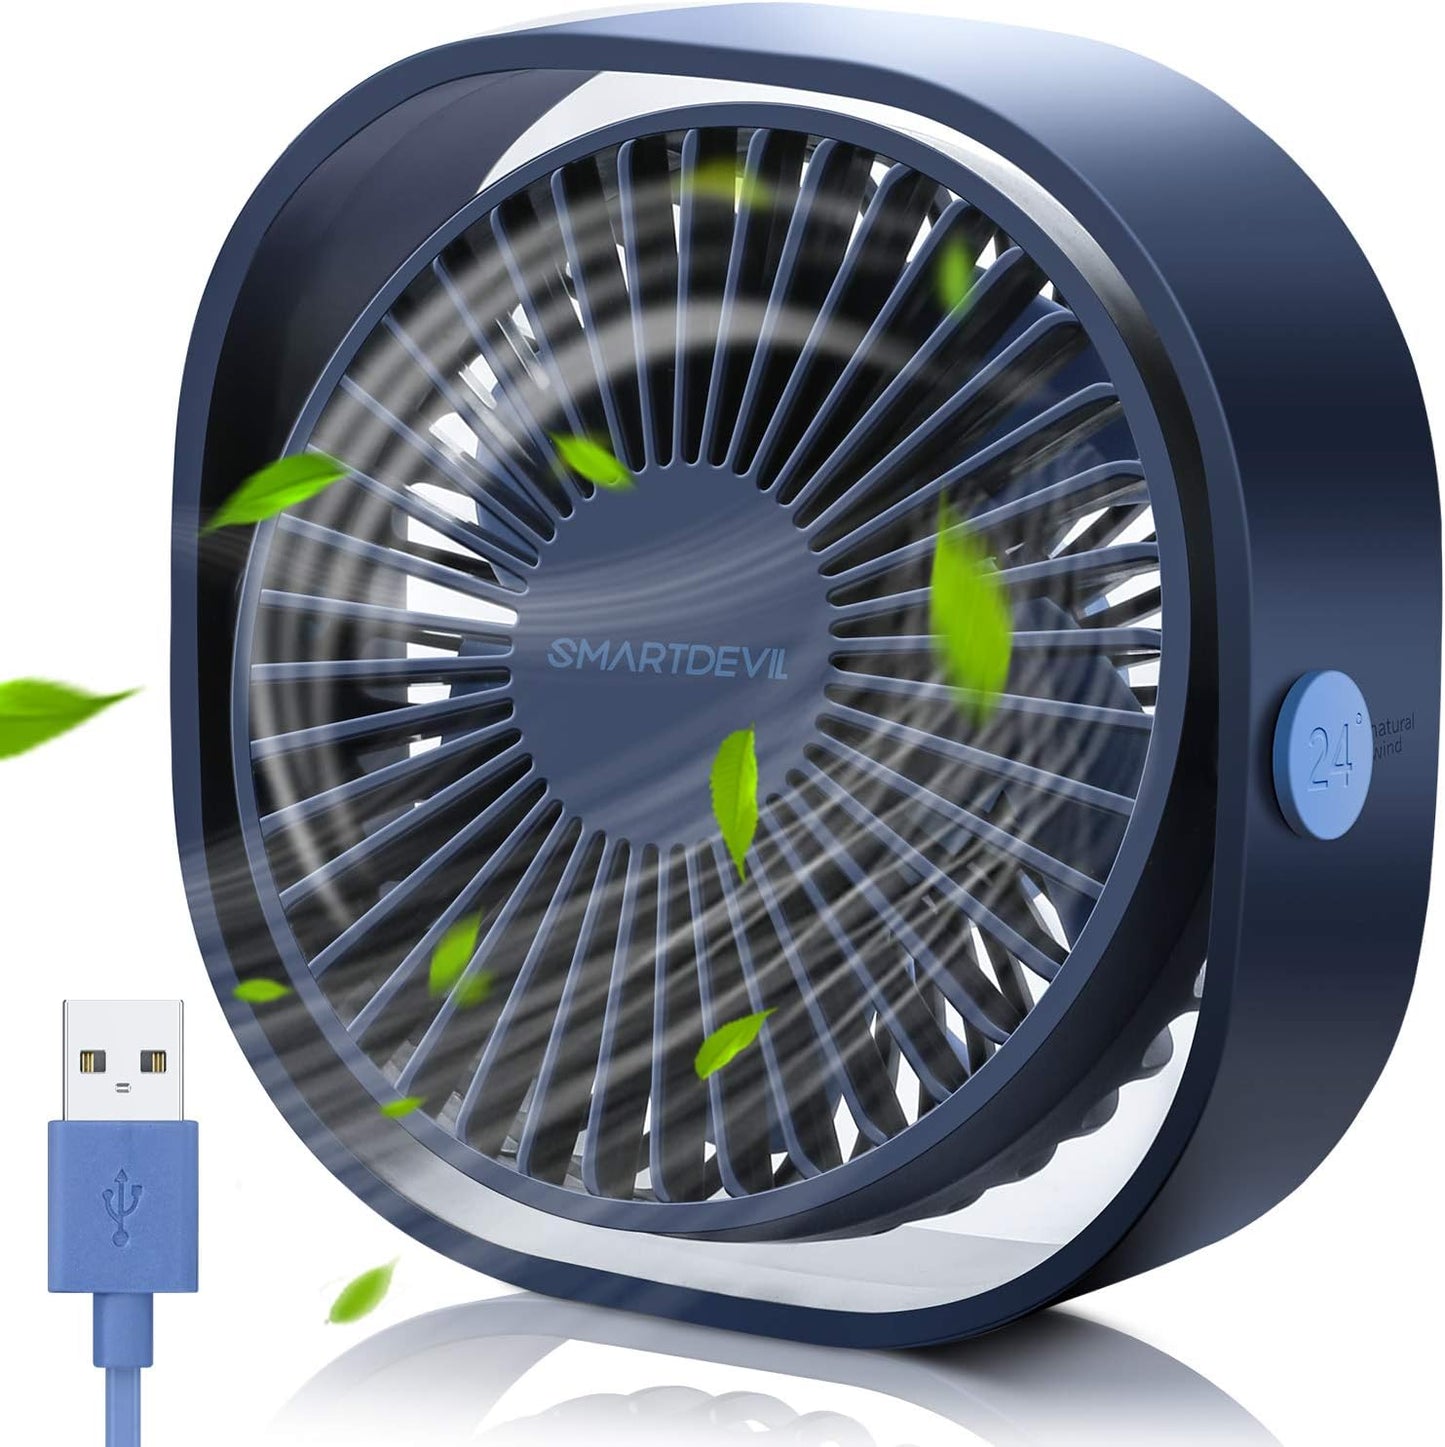 SmartDevil USB-Ventilator, Mini-USB-Ventilator, leiser Ventilator, tragbarer USB-Ventilator, für Scrivania, Auto, Homeoffice, Reisen. USB-Nahrungsmittel (Bianca)